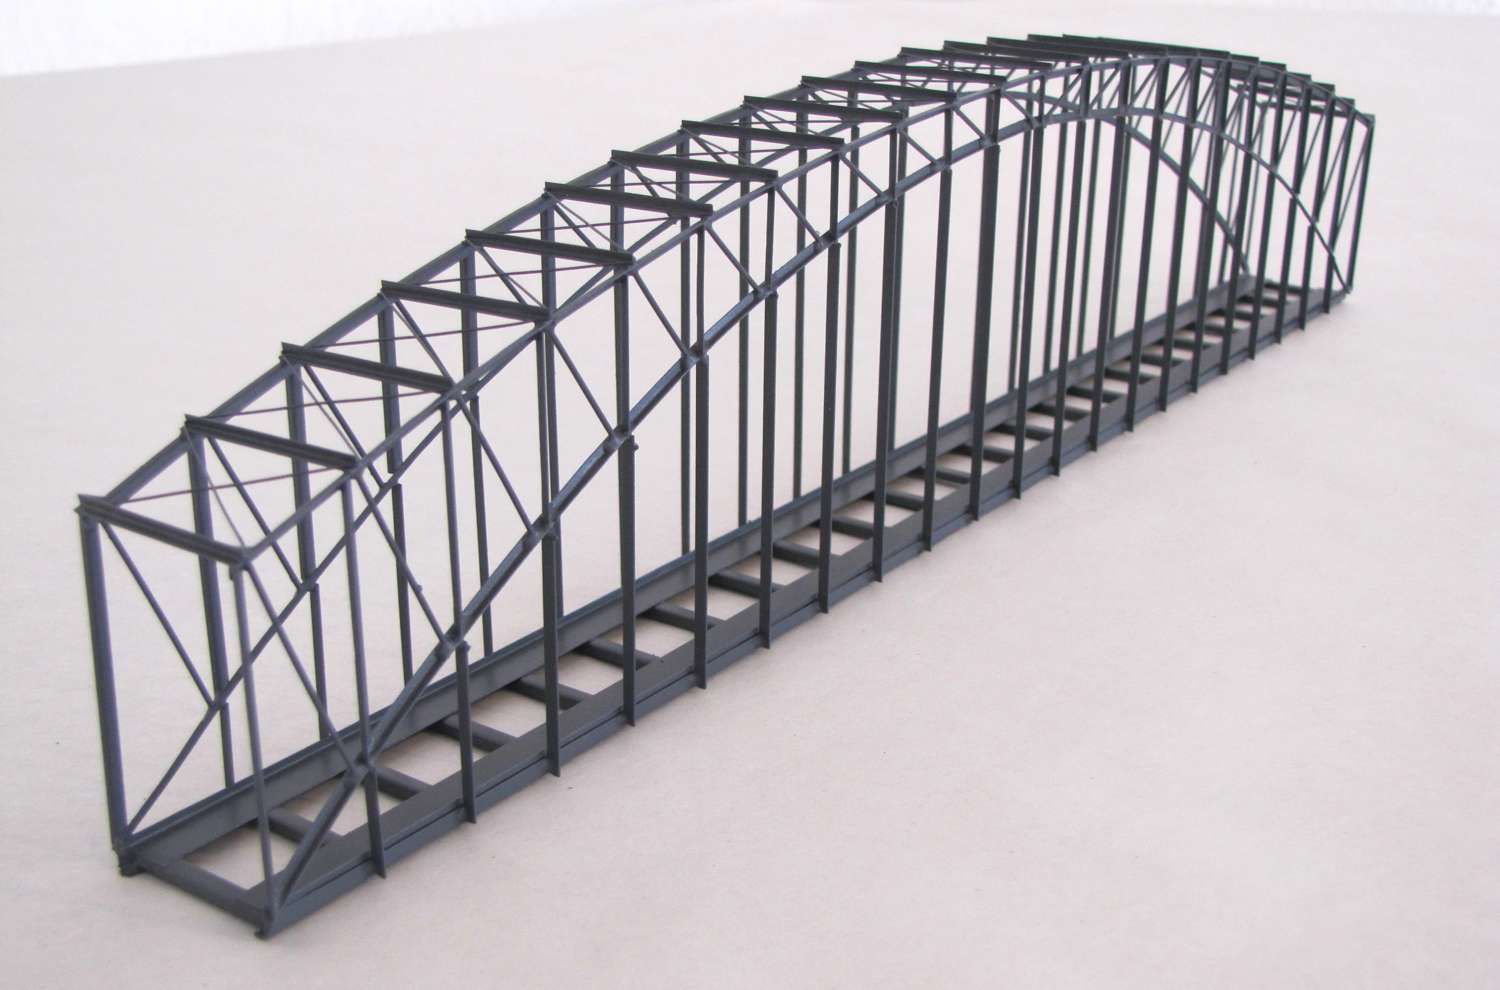 Hack 23110 - BN37 - Bogenbrücke 37cm, 1-gleisig, grau